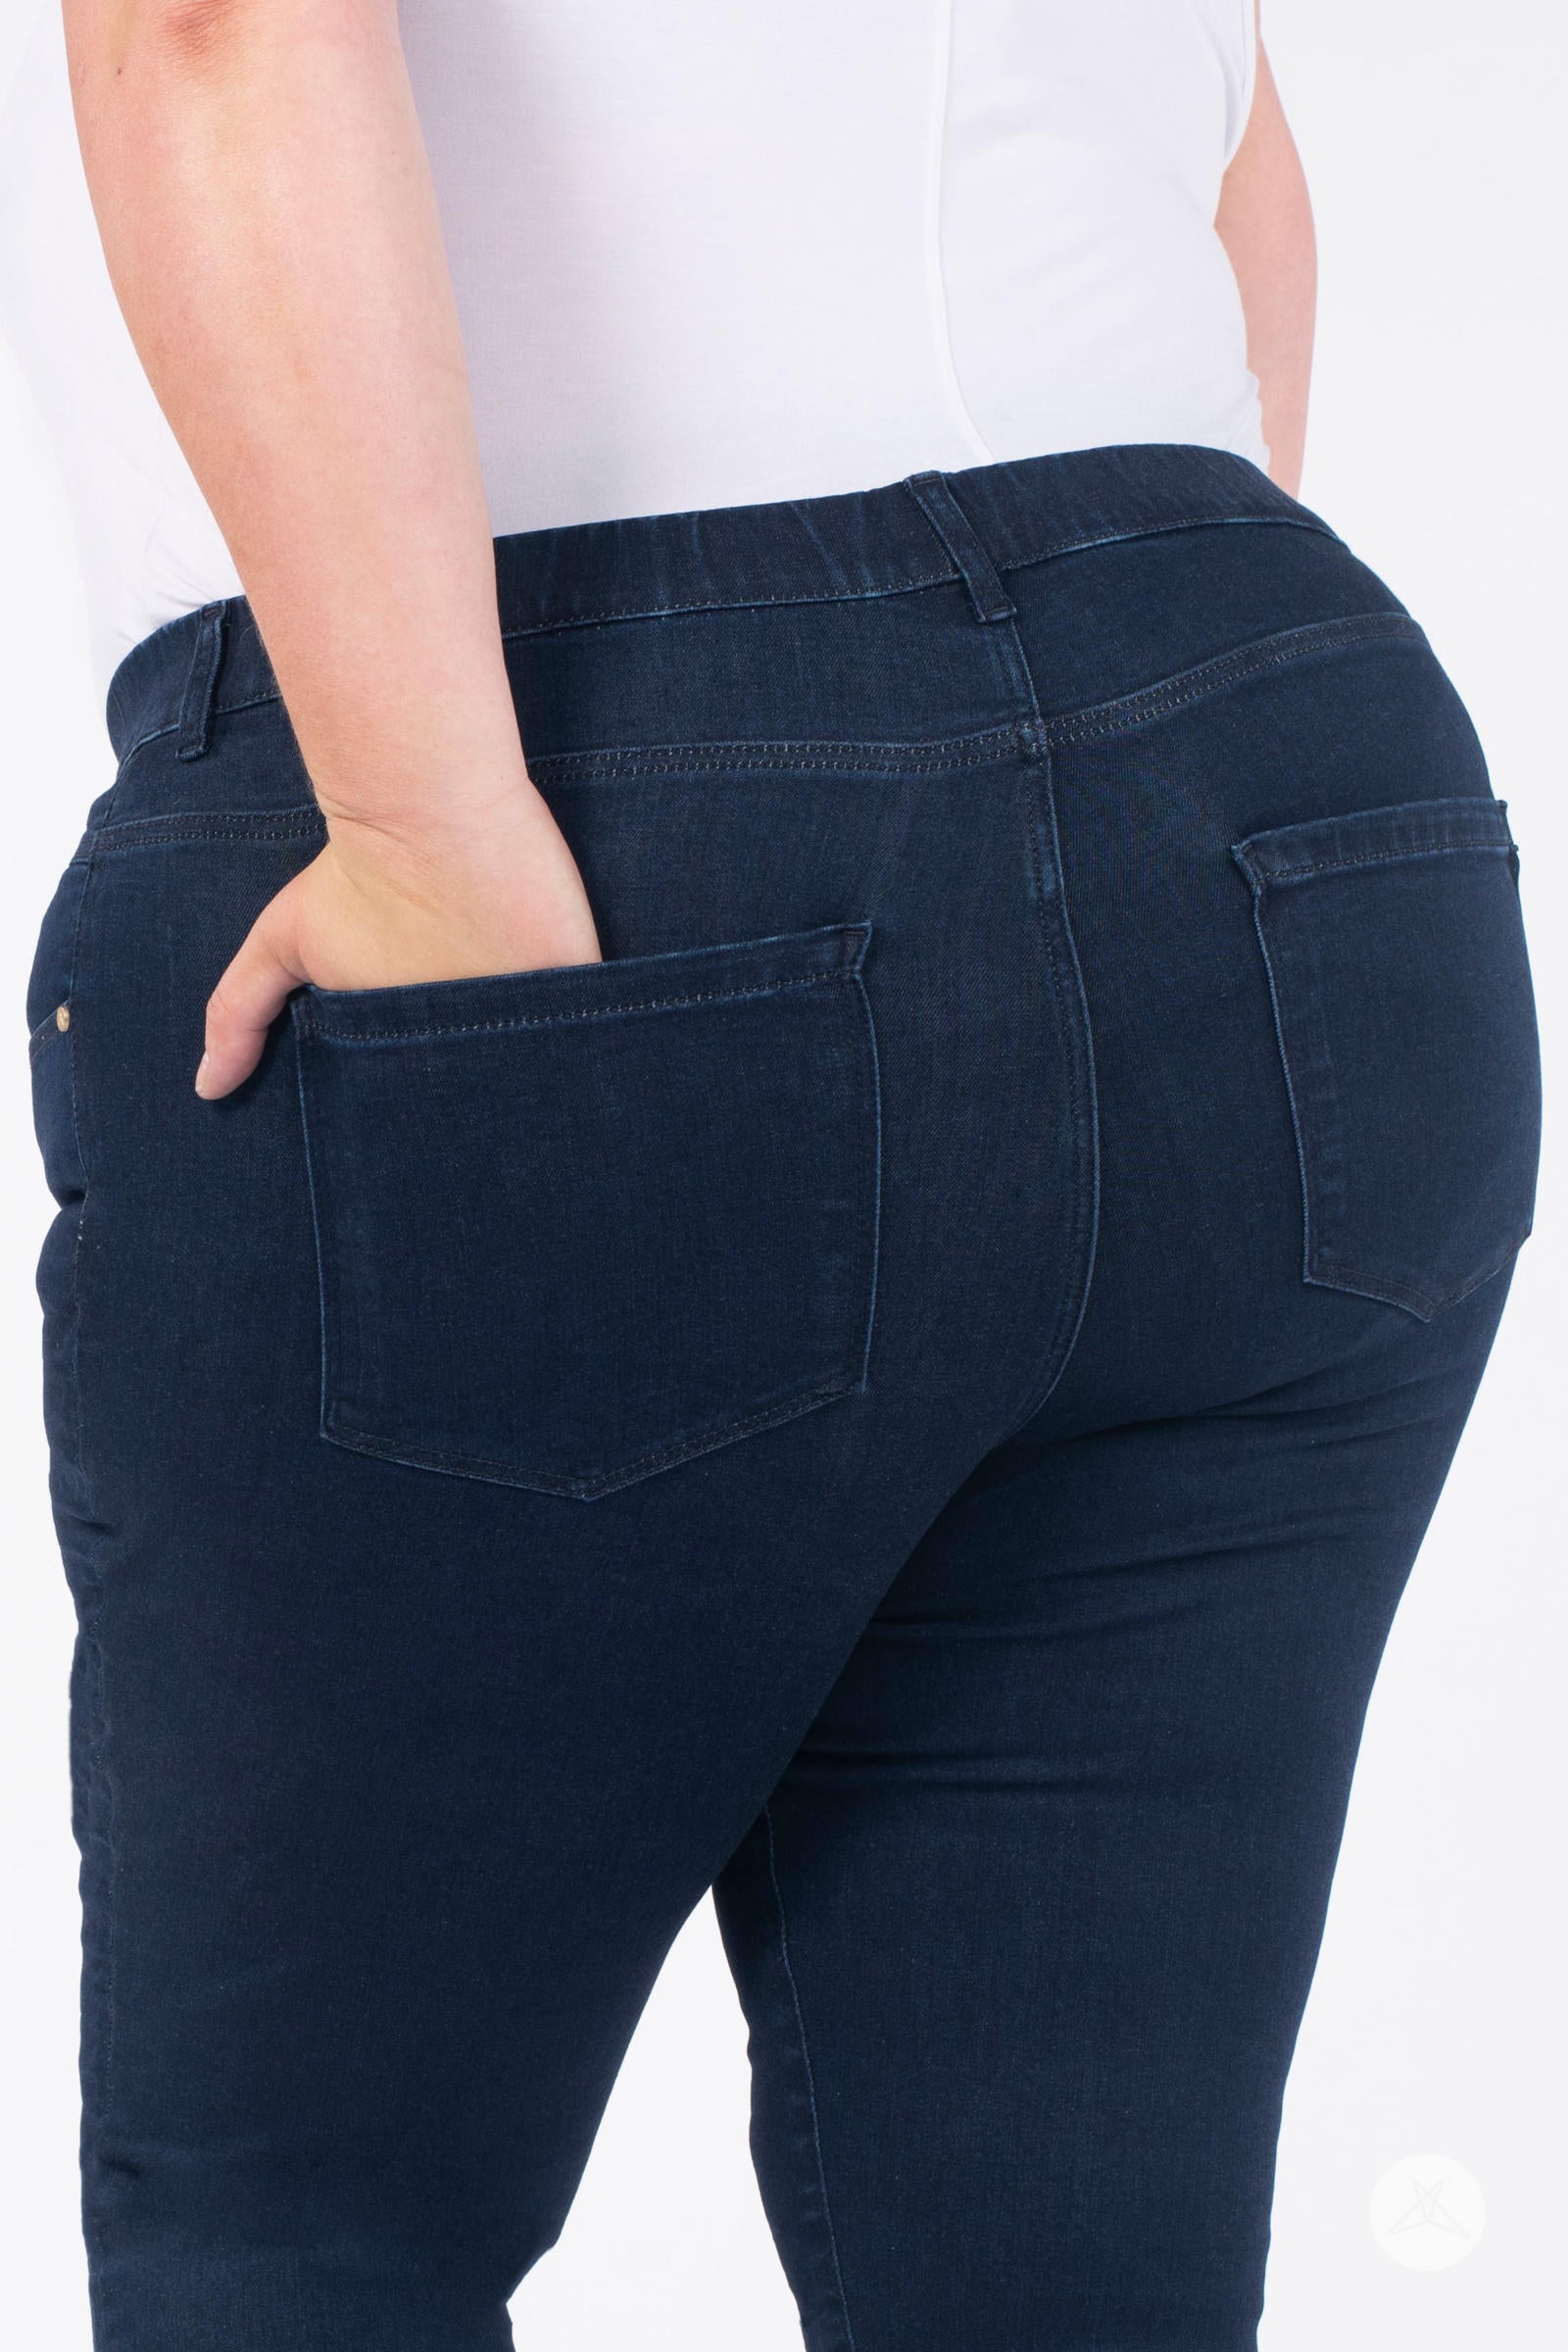 Denim Jeans Leggings Women Jeggings Slim Pencil Pants Skinny Trousers High  Waisted Seamless Leggins Laides Streetwear From Angelshopping666, $13.31